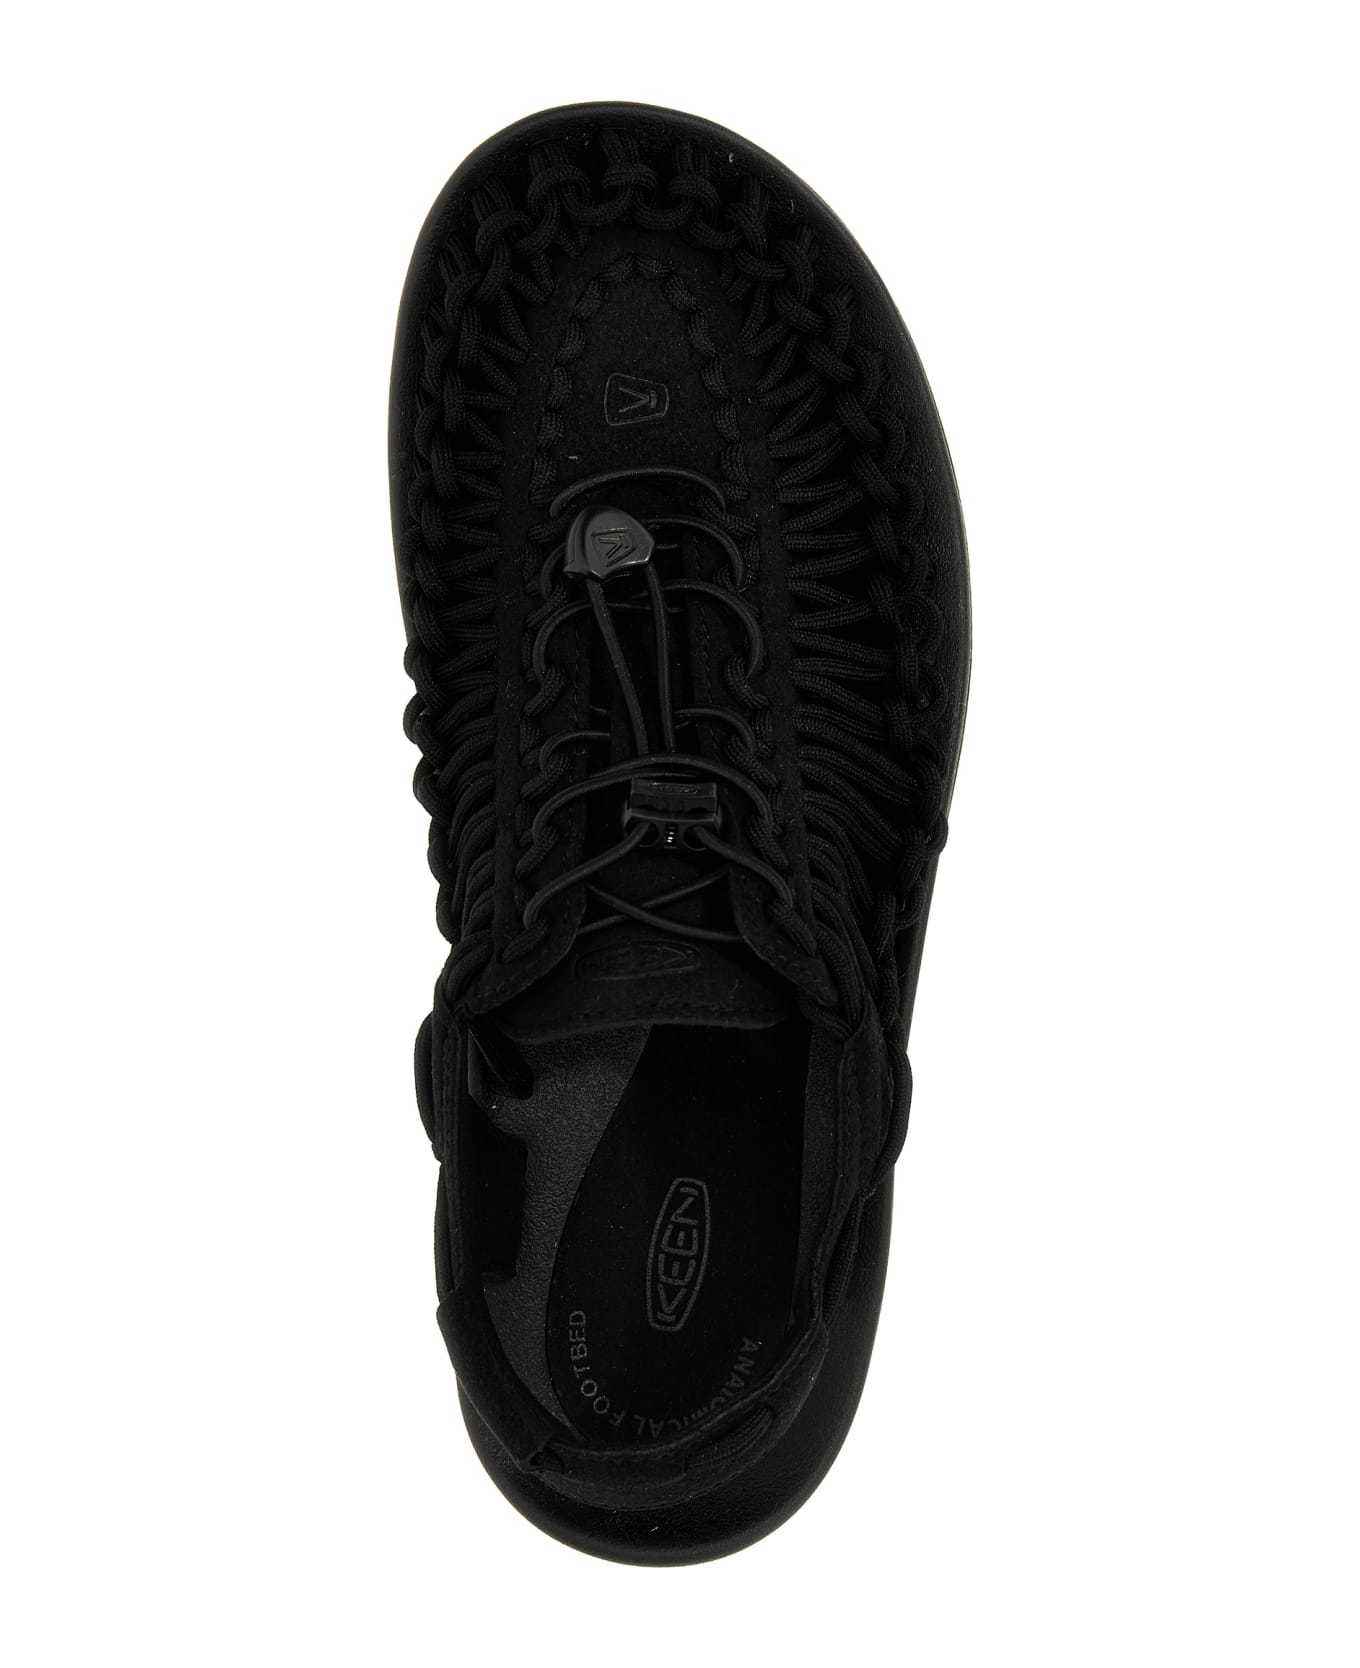 Keen 'uneek' Sneakers - Black/black その他各種シューズ